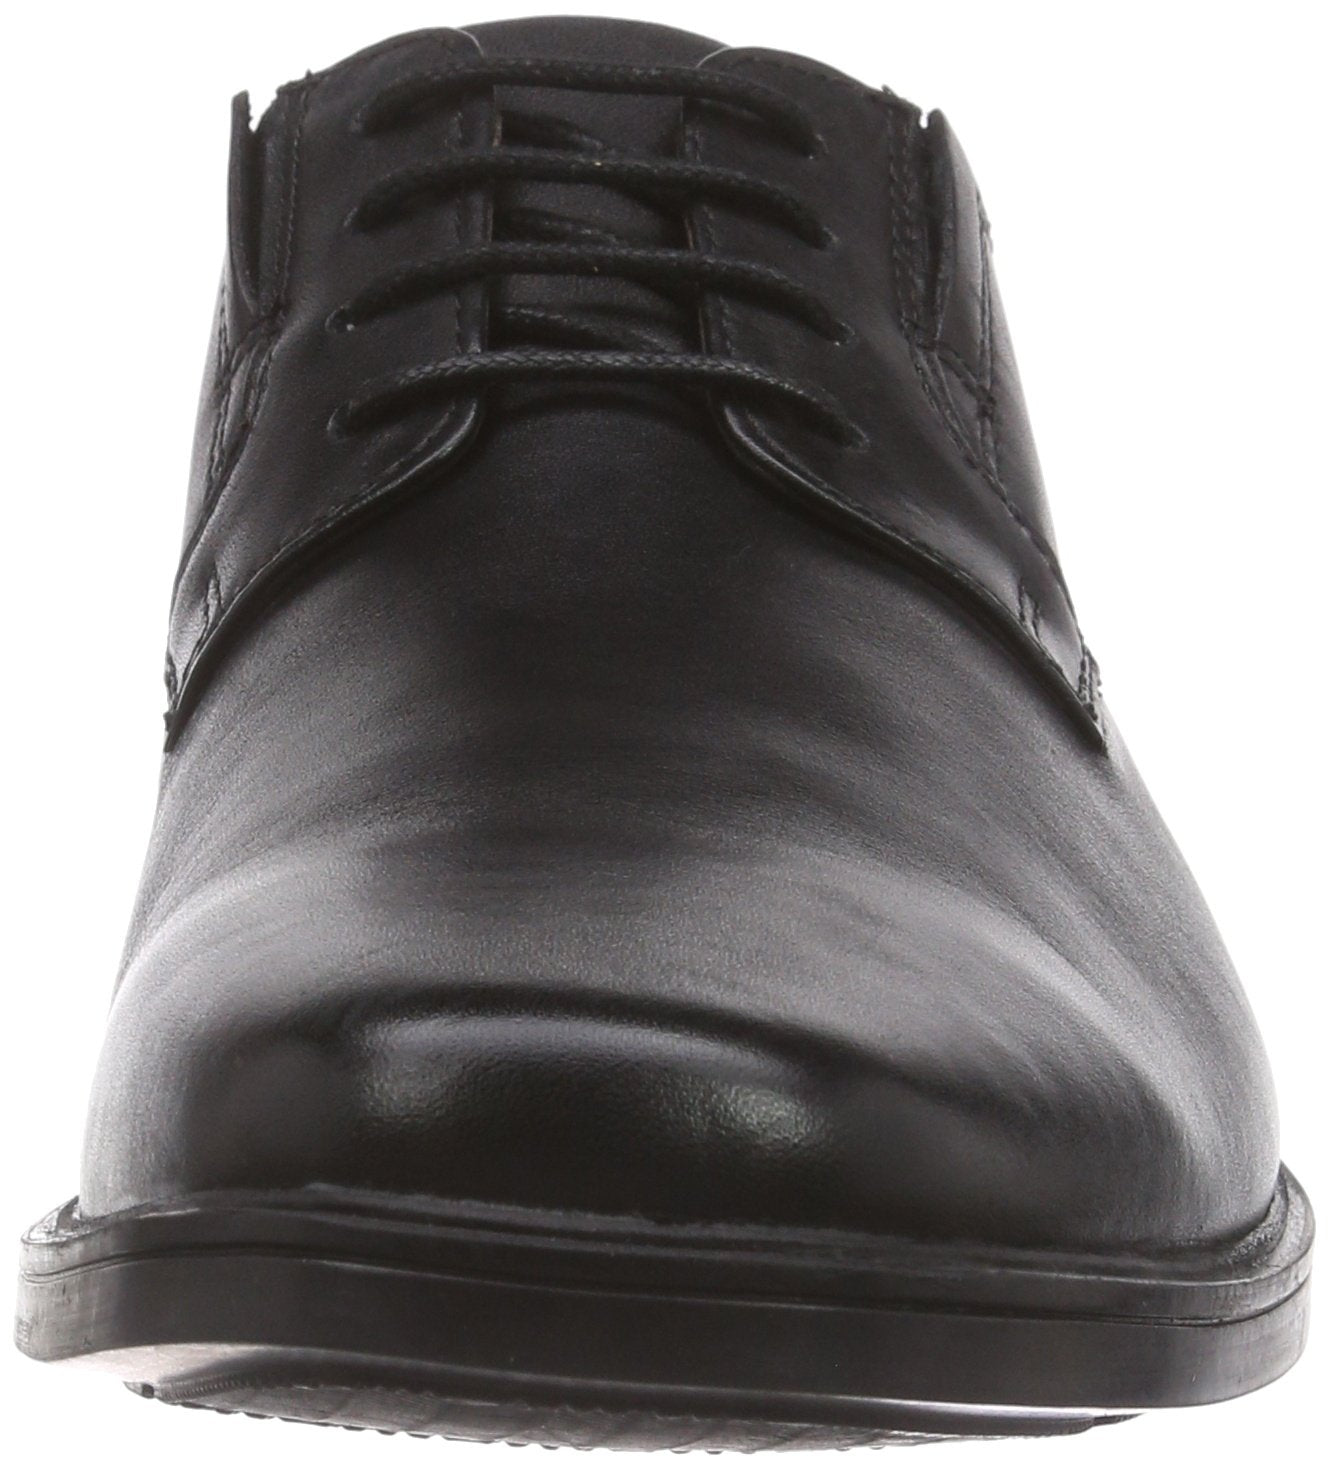 Clarks Men's Tilden Plain Black Leather Formal Shoes 